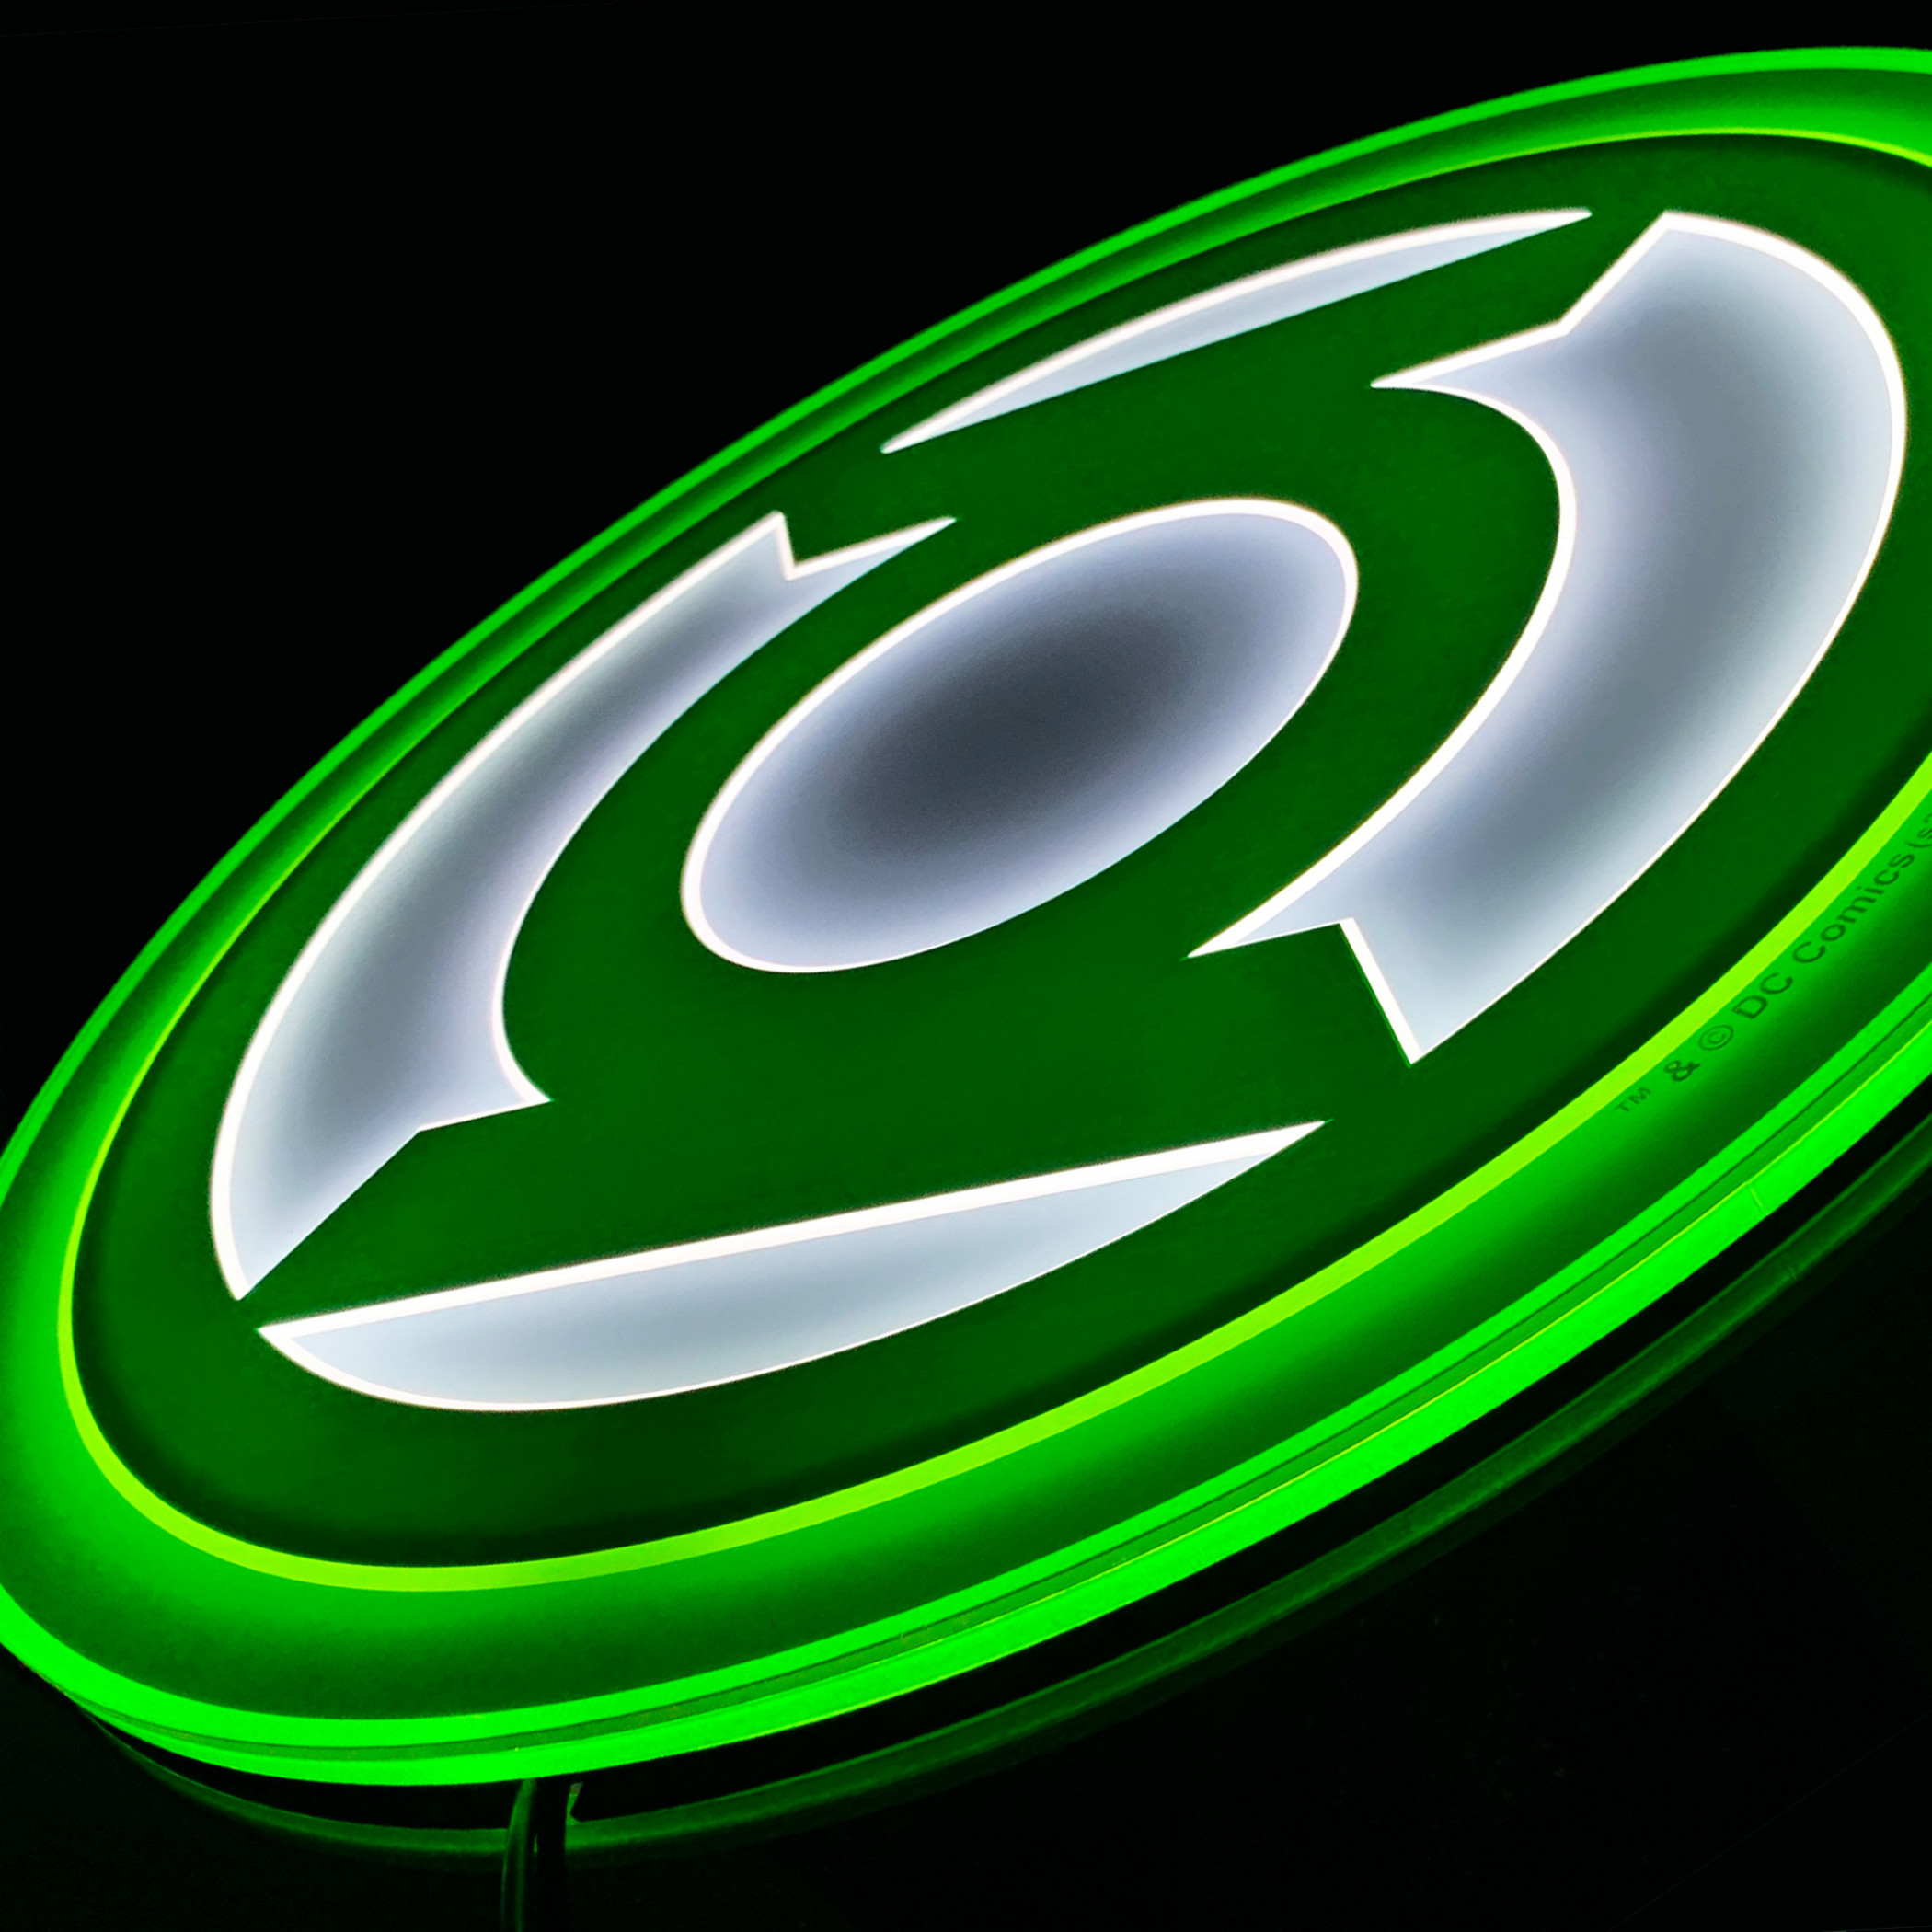 Green Lantern Symbol Illuminated Table Lamp or Mountable Wall Lamp